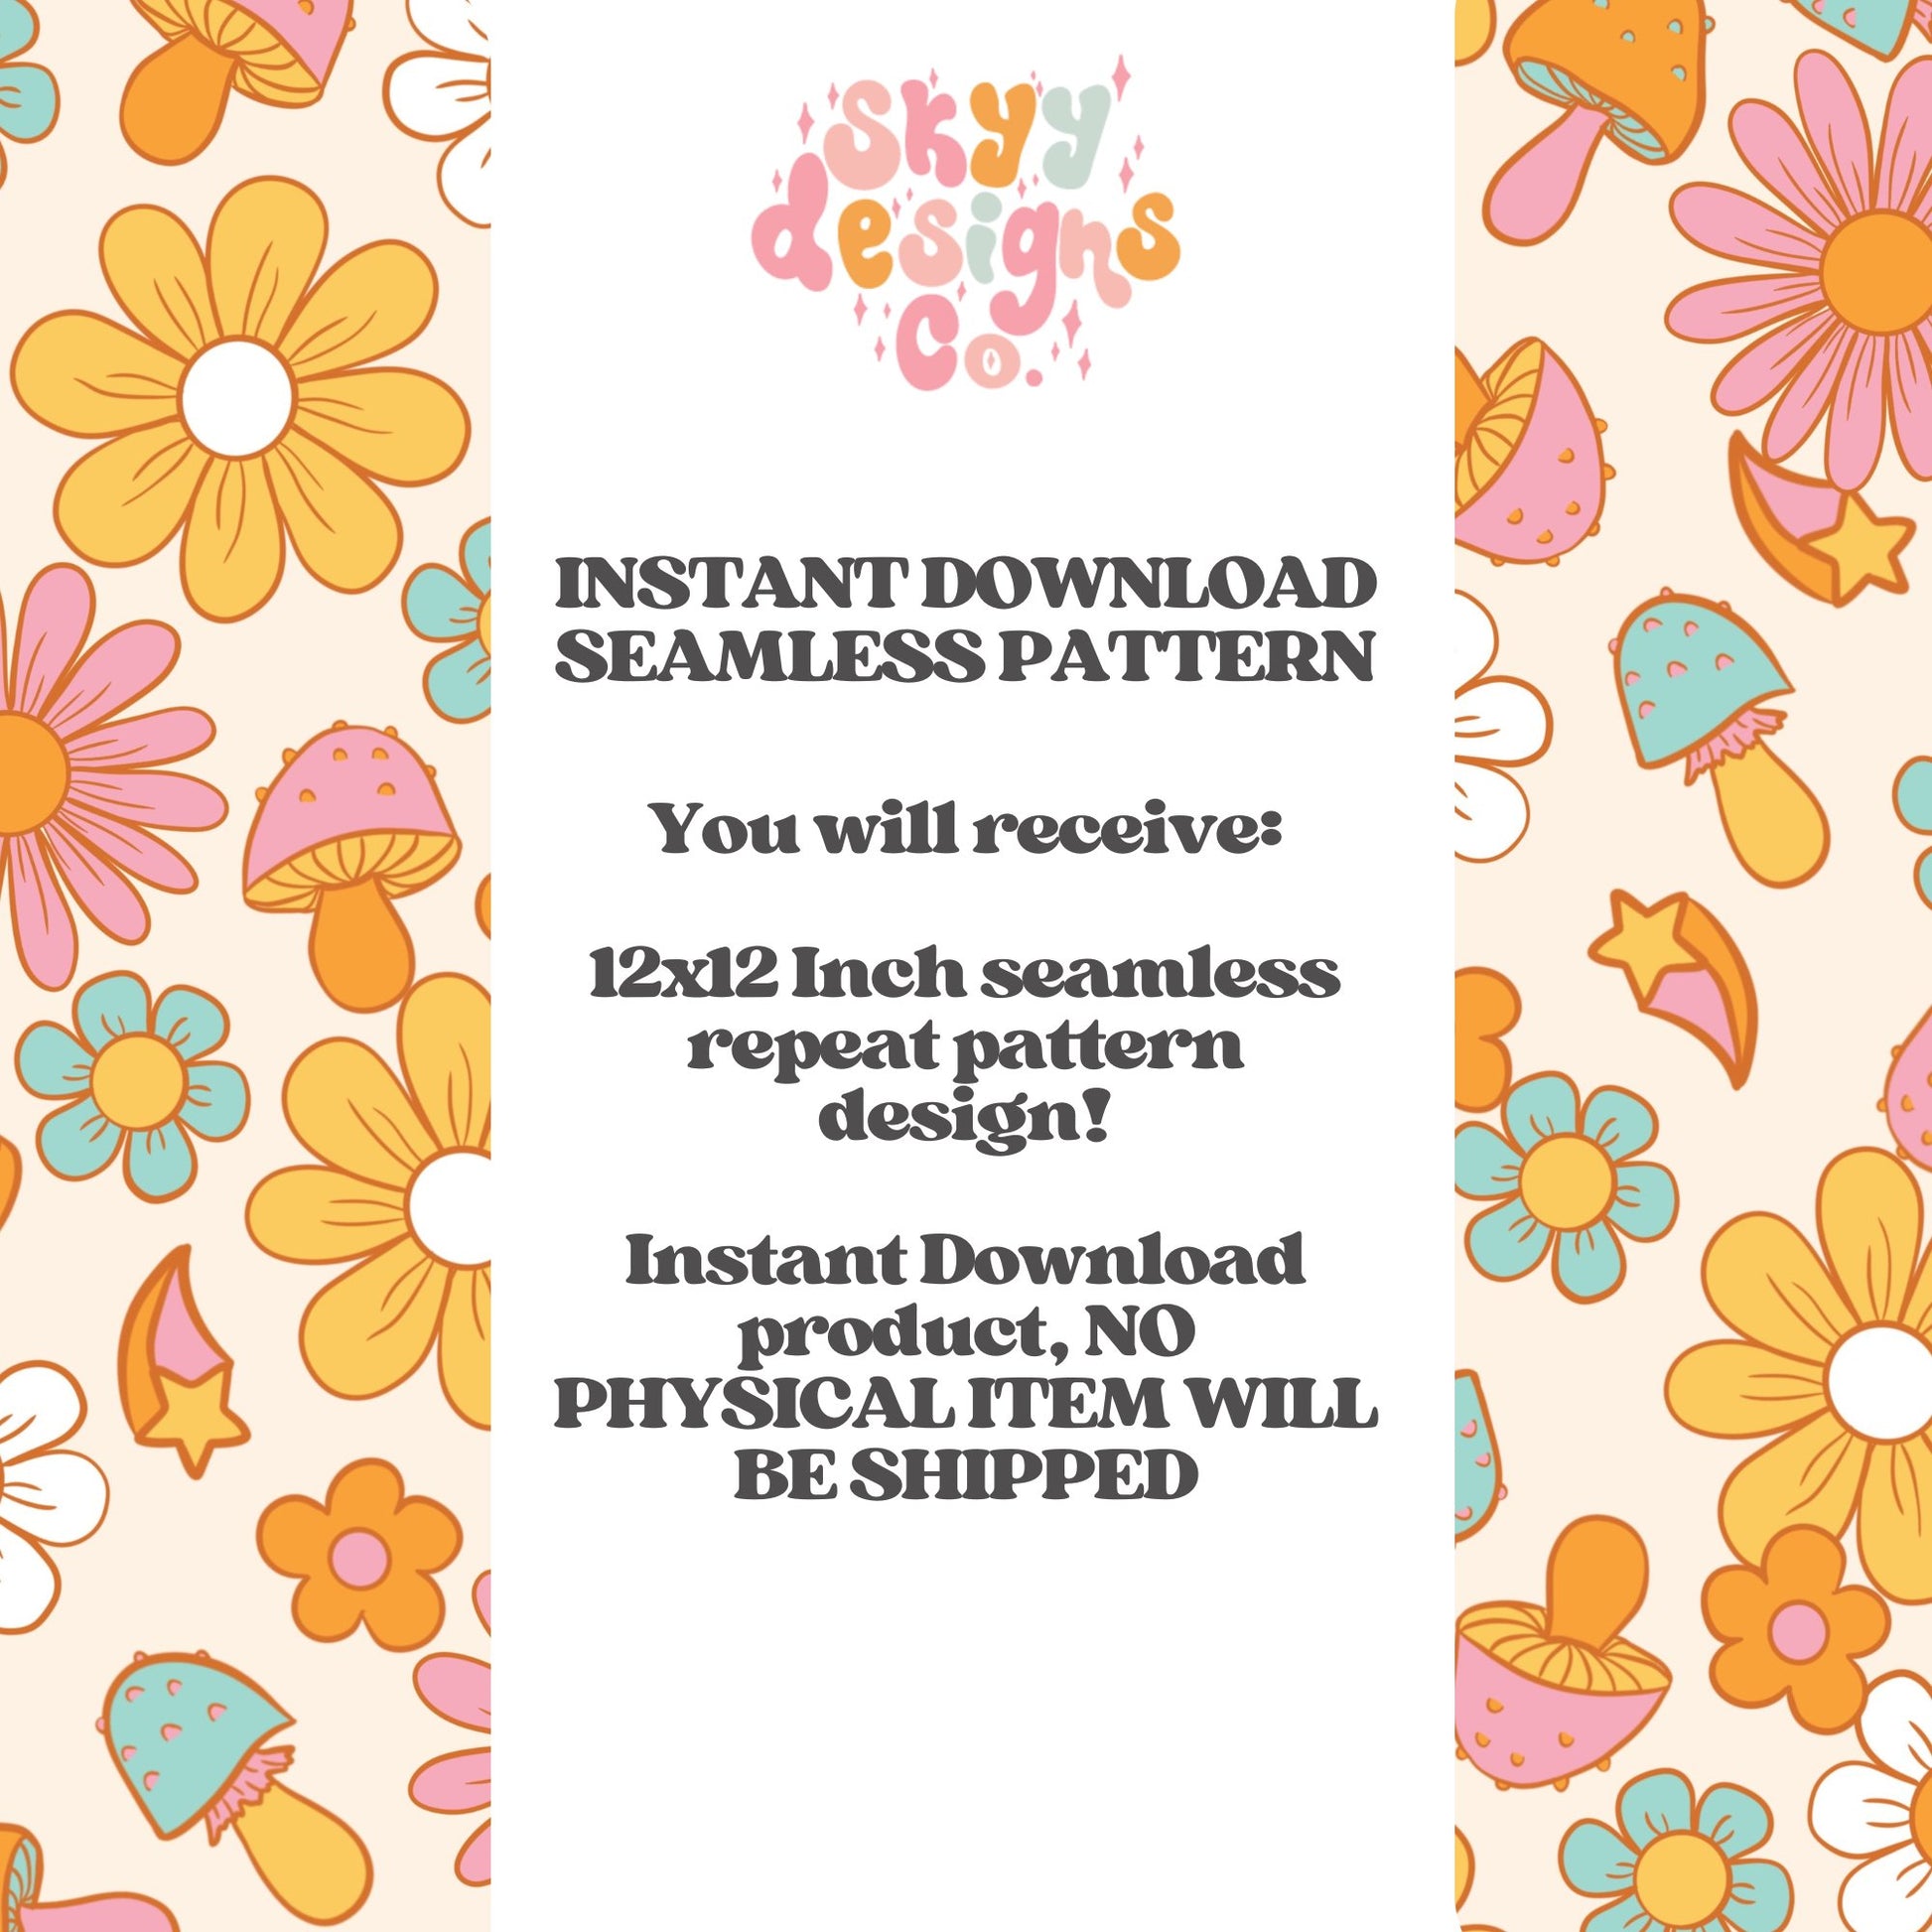 Bright groovy mushrooms pattern design - SkyyDesignsCo | Seamless Pattern Designs